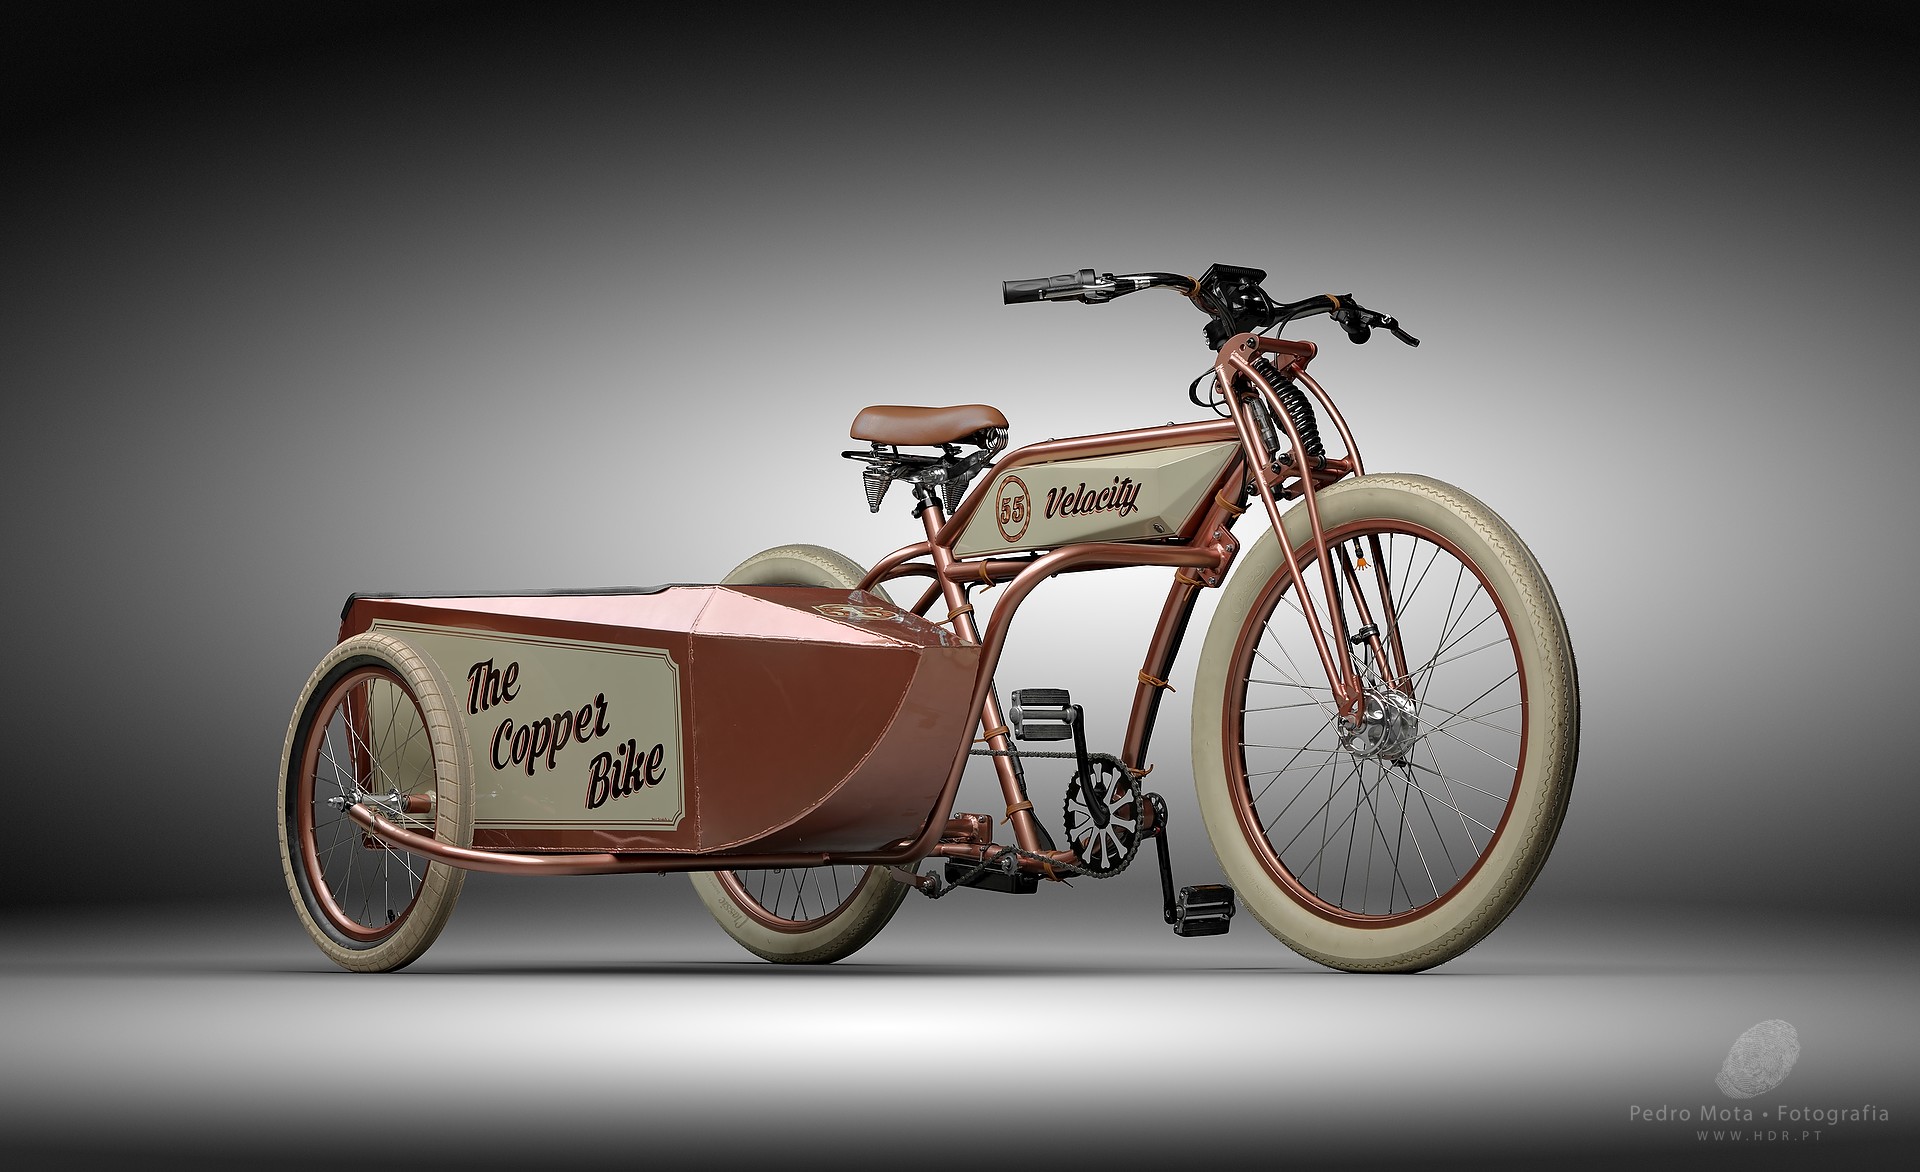 The Cooper Bike – Pedro Mota – Automotive Photography